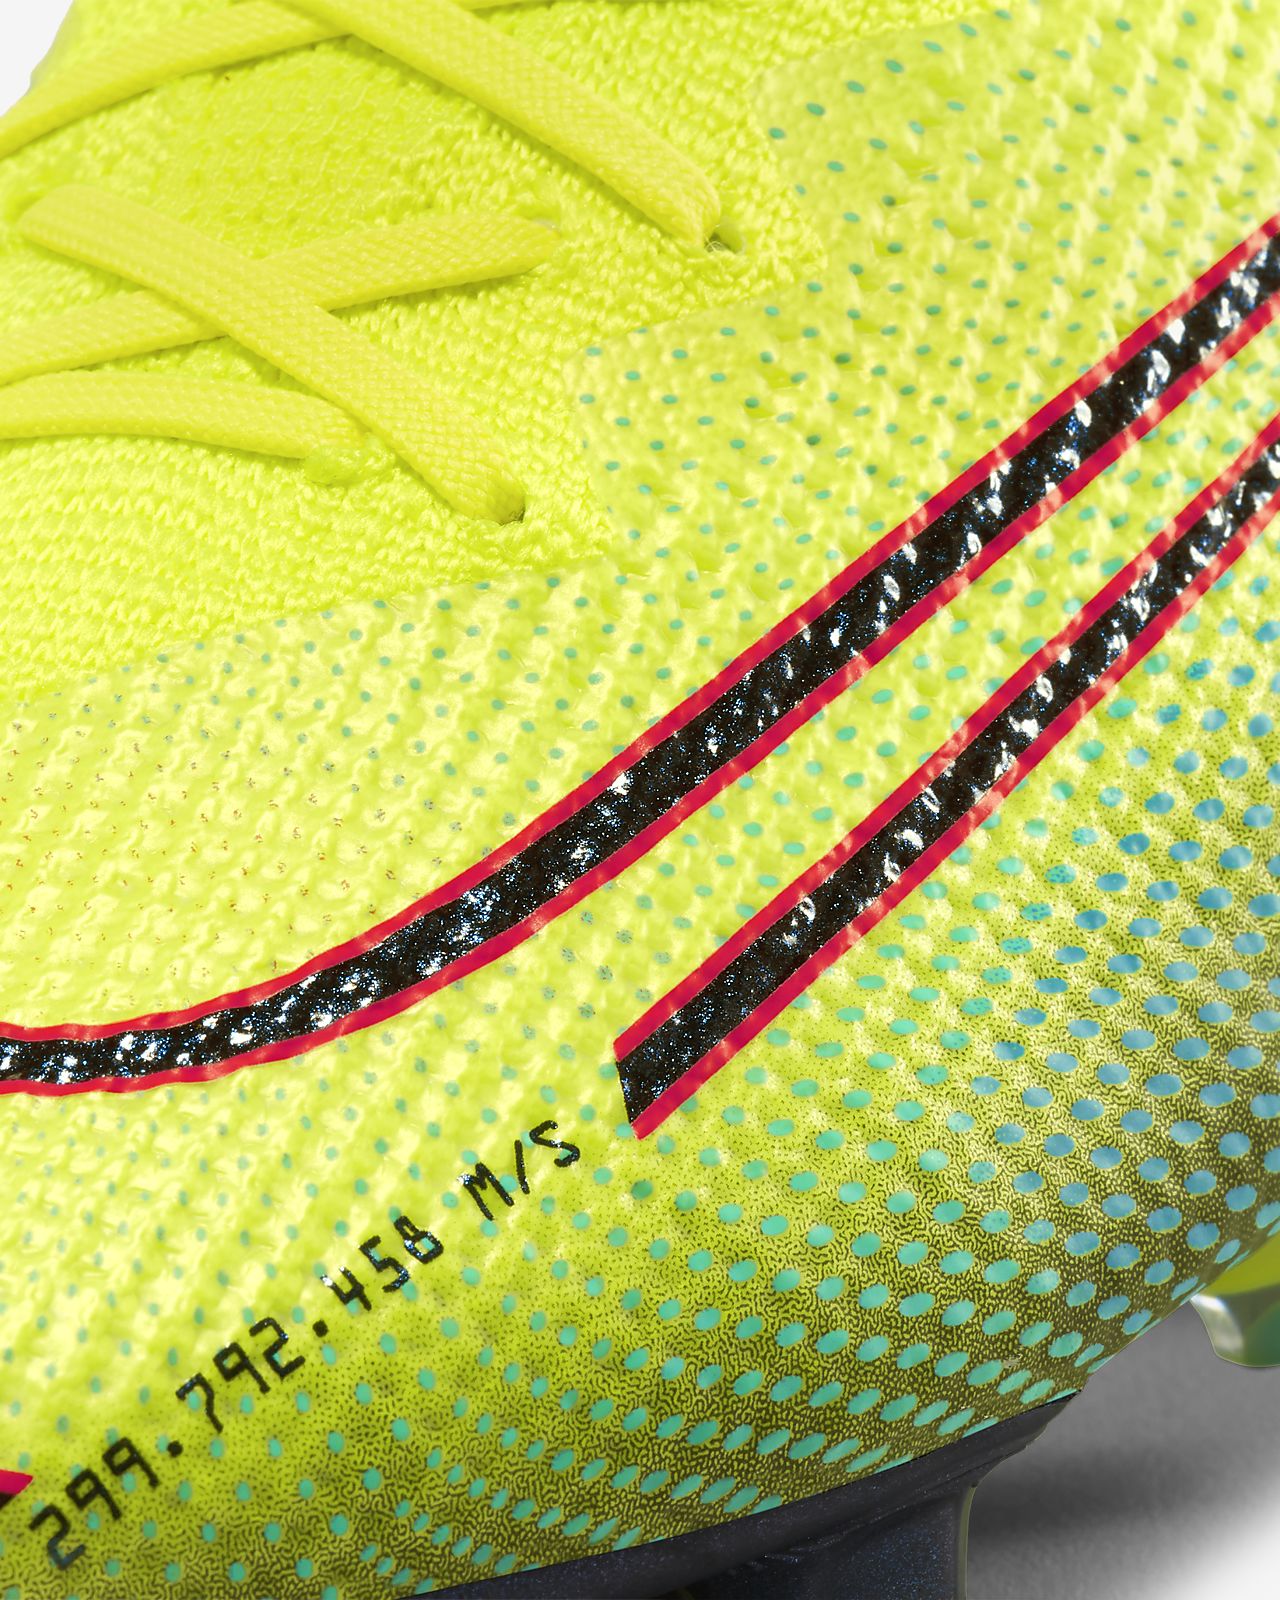 Nike Mercurial Vapor 13 Academy Neymar Jr. TF Artificial Turf